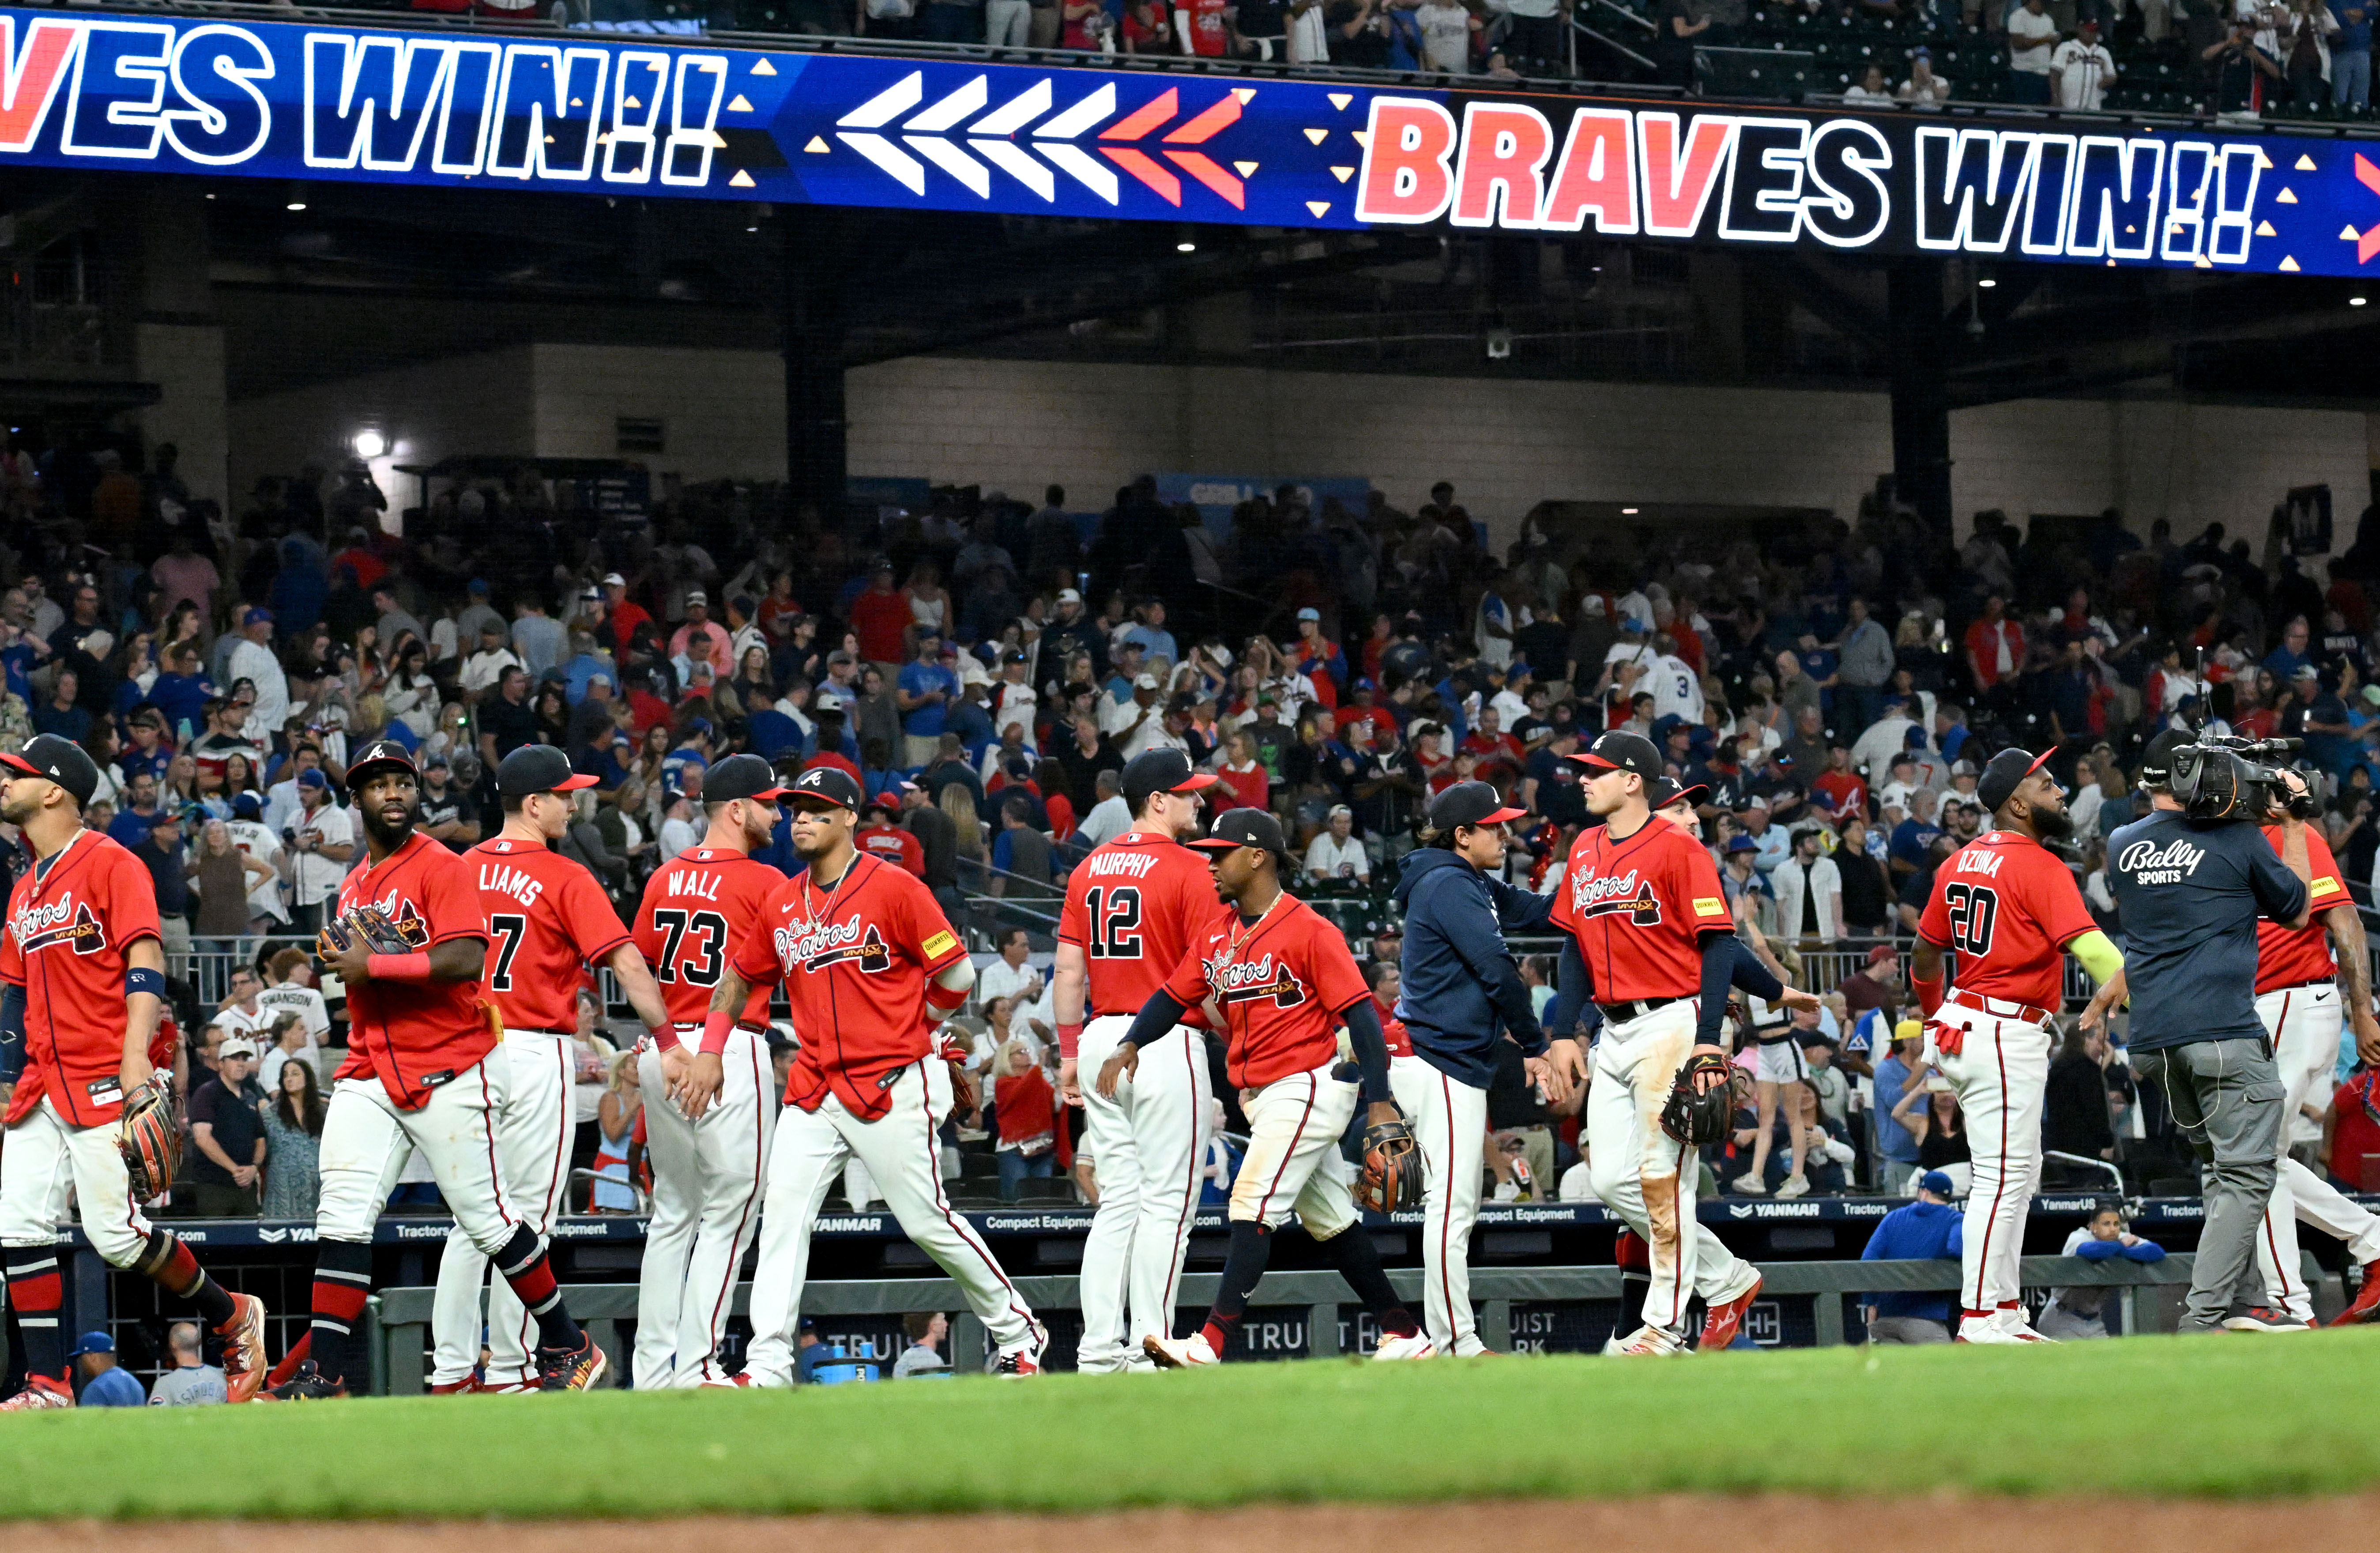 Braves – Nationals: Bet Atlanta's winning streak through Cubs series